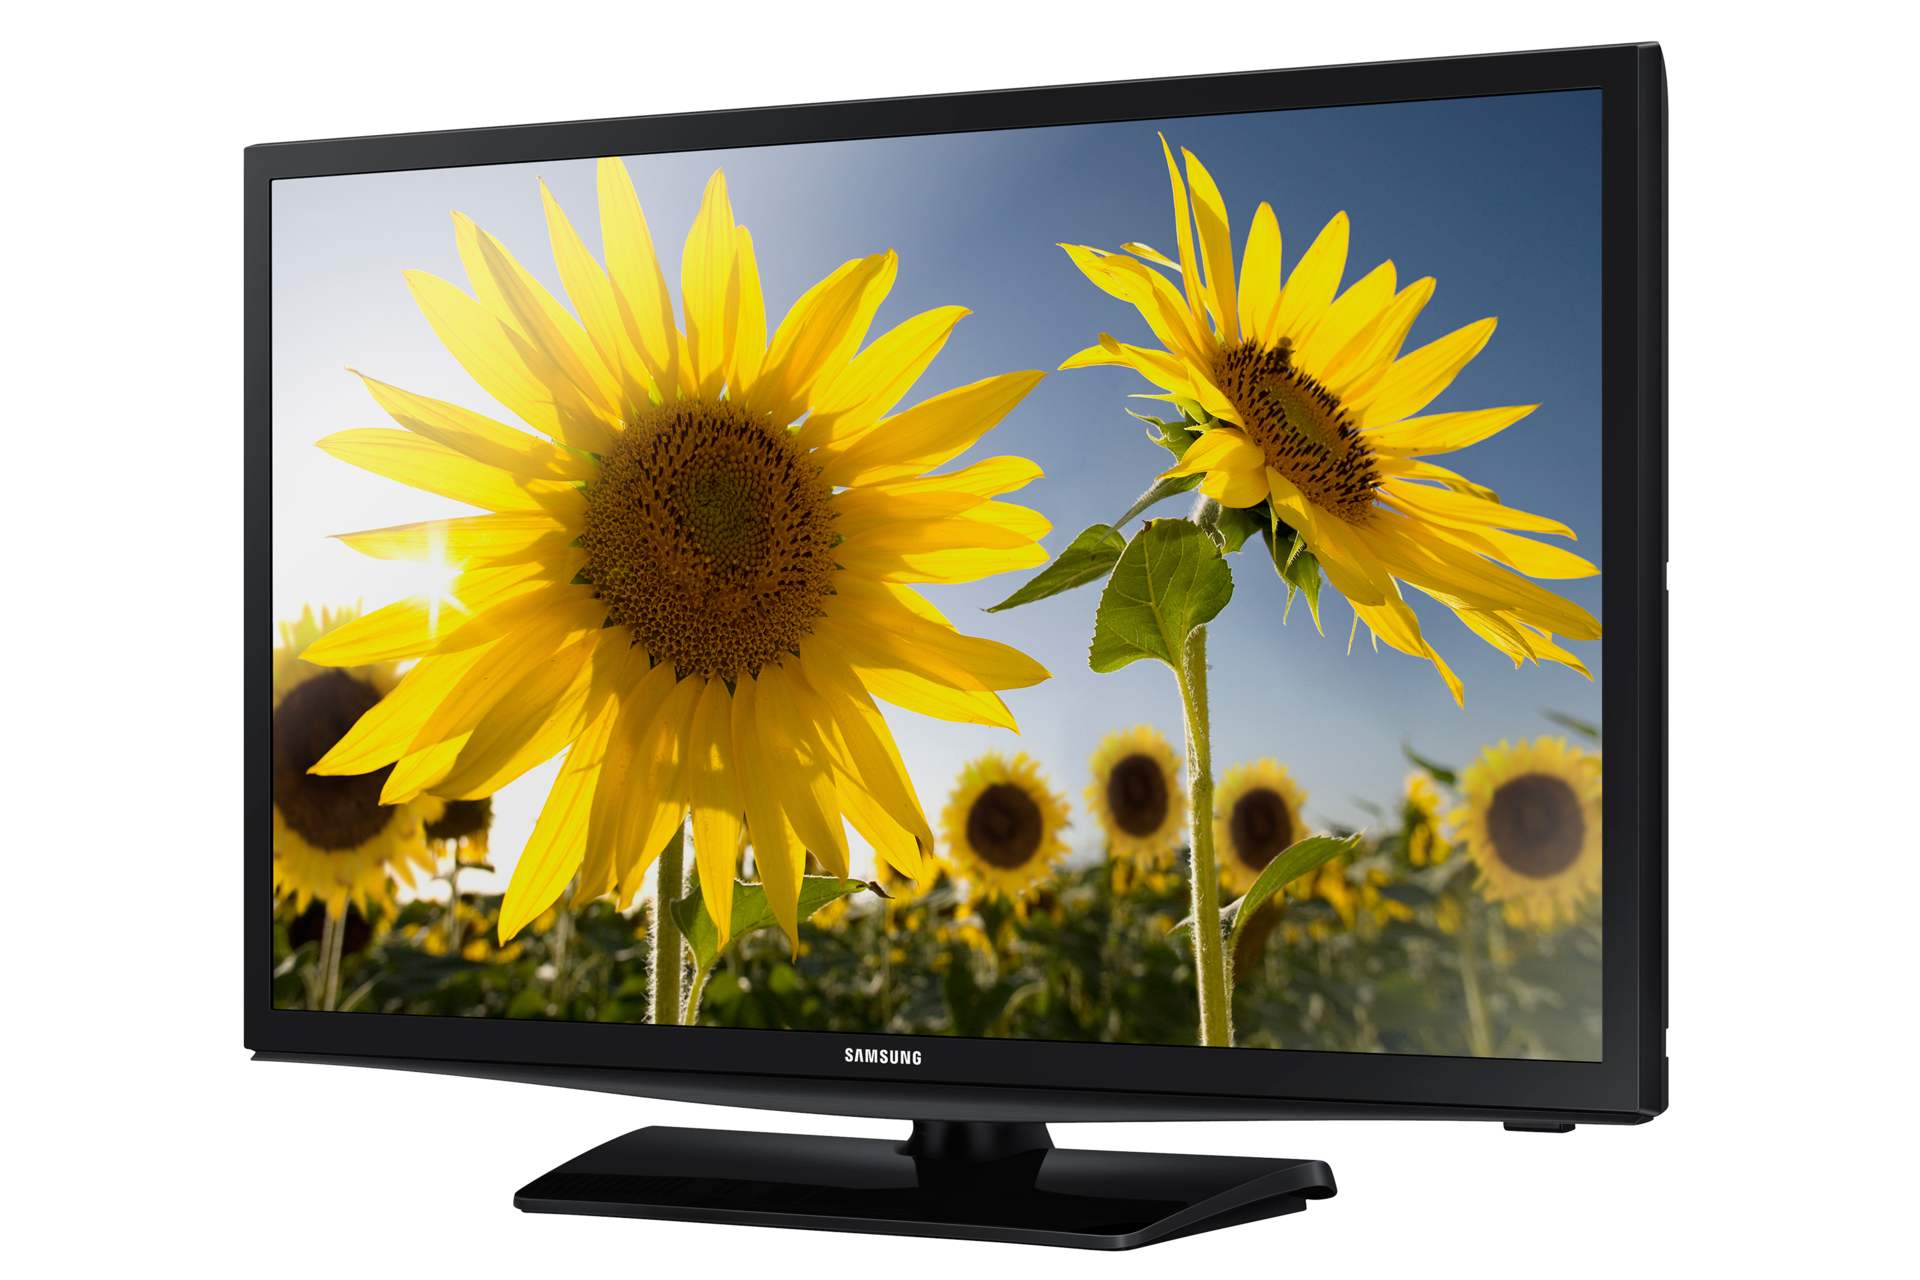 Samsung LED TV - UA 32J 4003 ARLXL Image